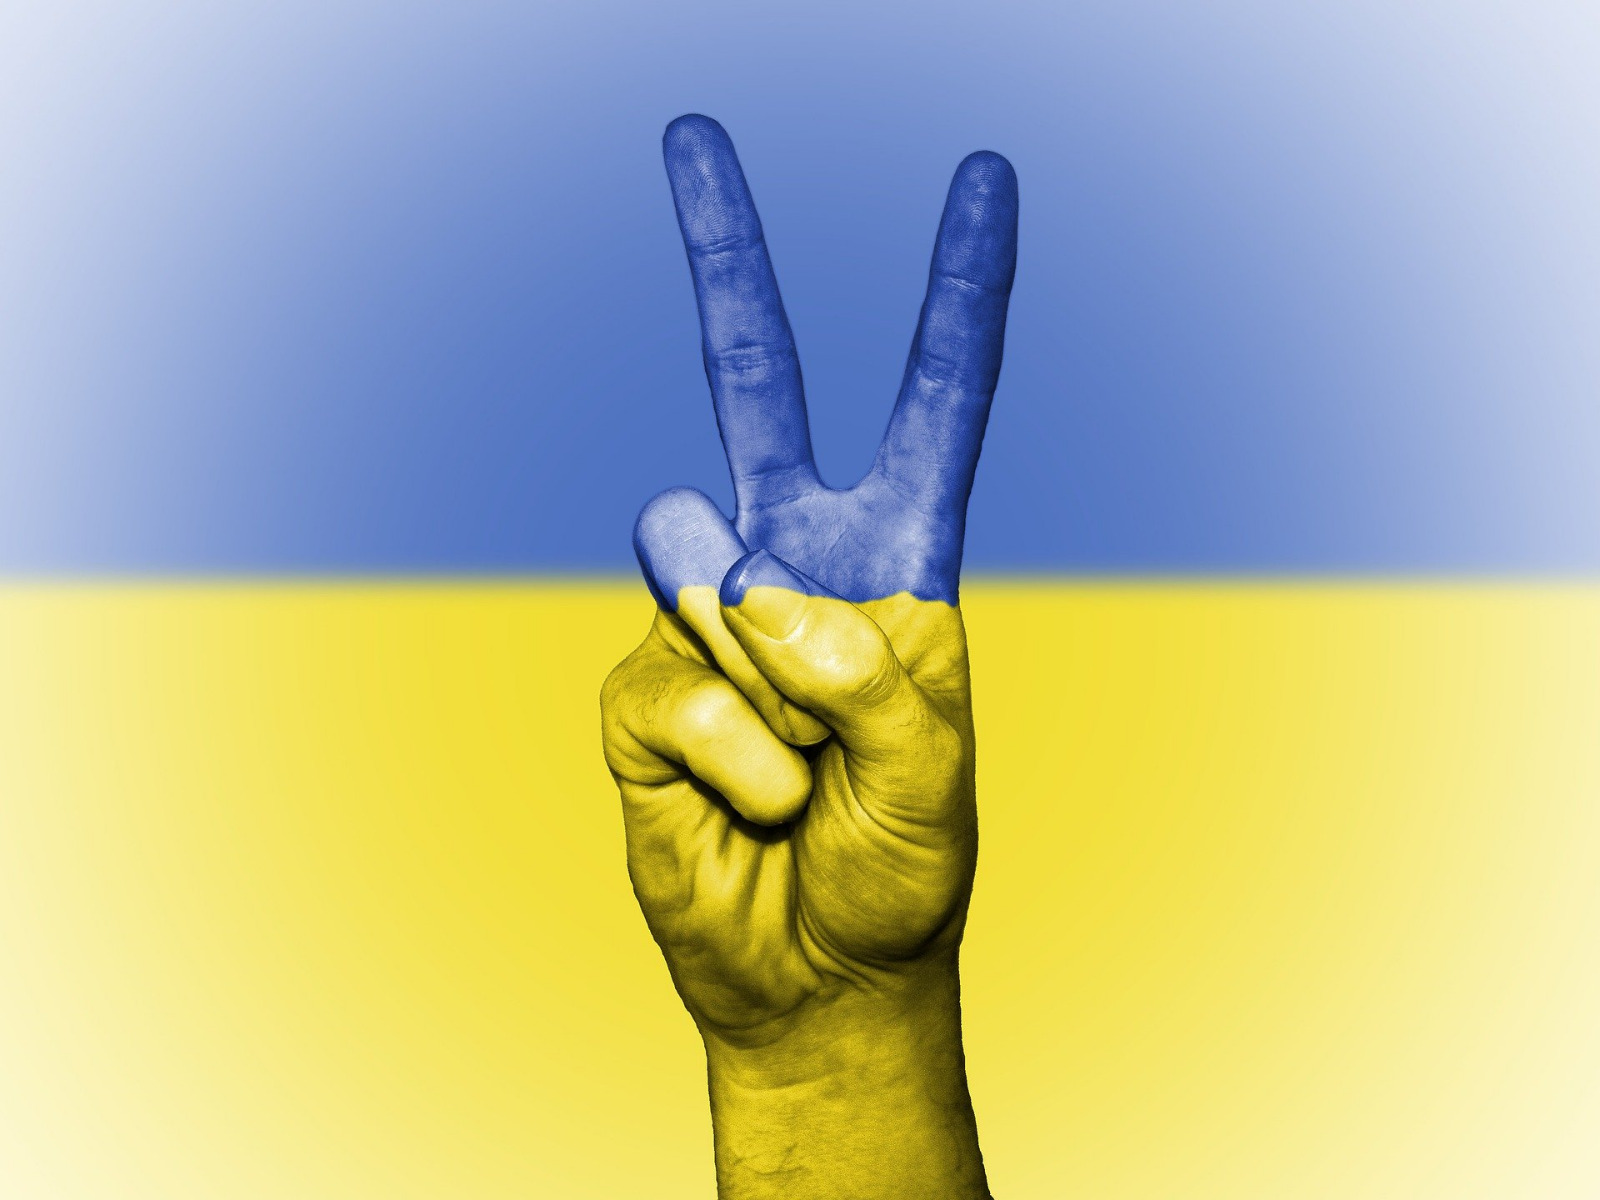 Hilfe Ukraine